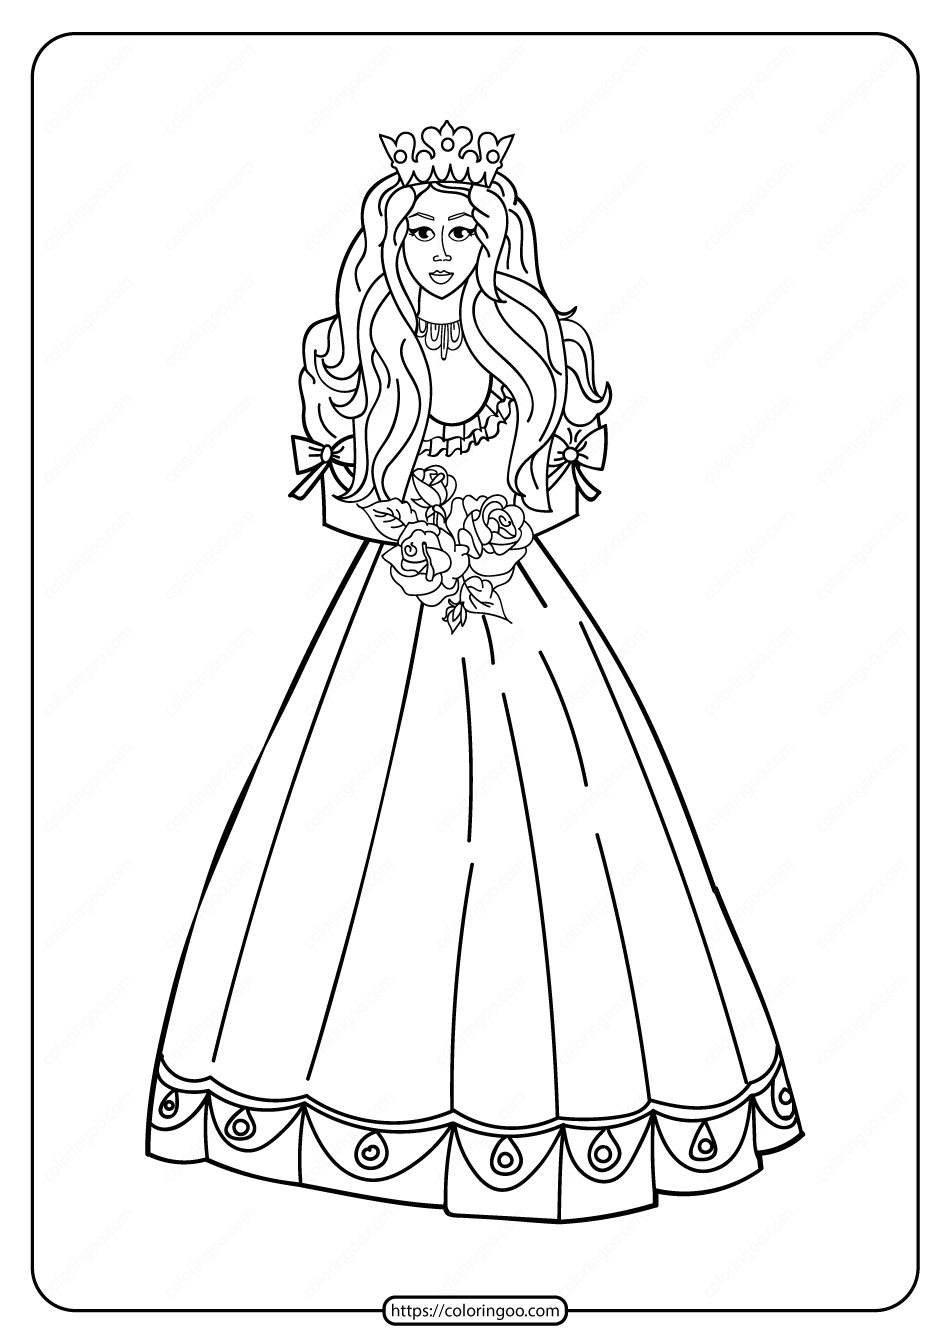 Free printable princess pdf coloring pages high quality free printable pdf coloring drawingâ princess printables princess coloring pages princess coloring